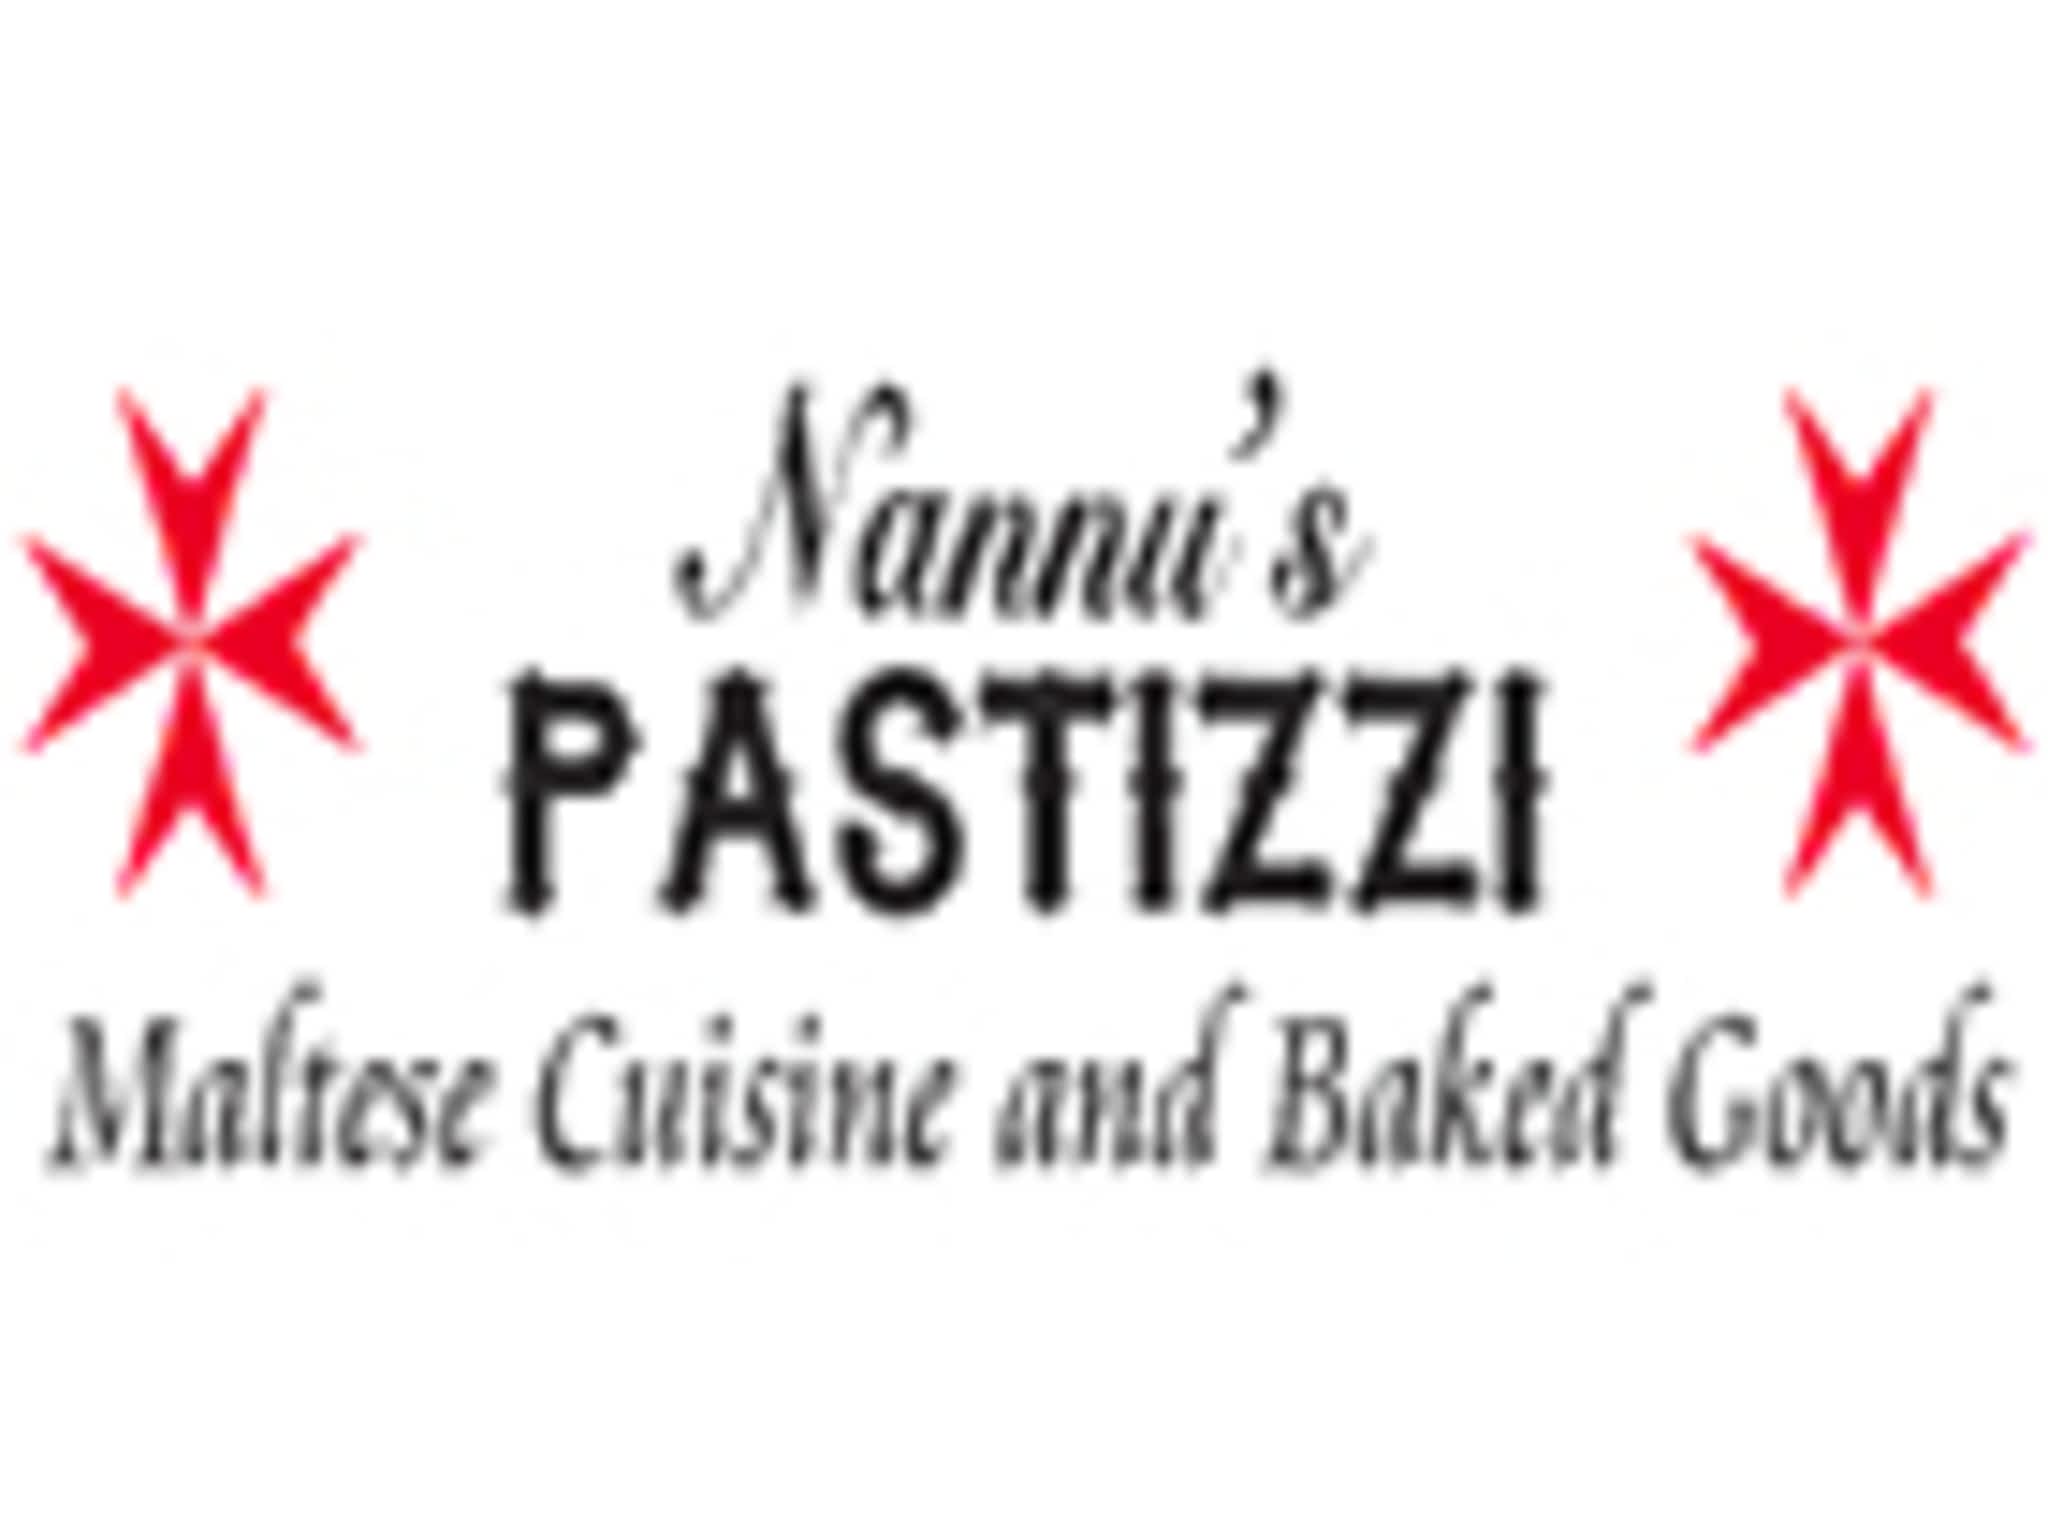 photo Nannu's Pastizzi Maltese Cuisine & Baked Goods